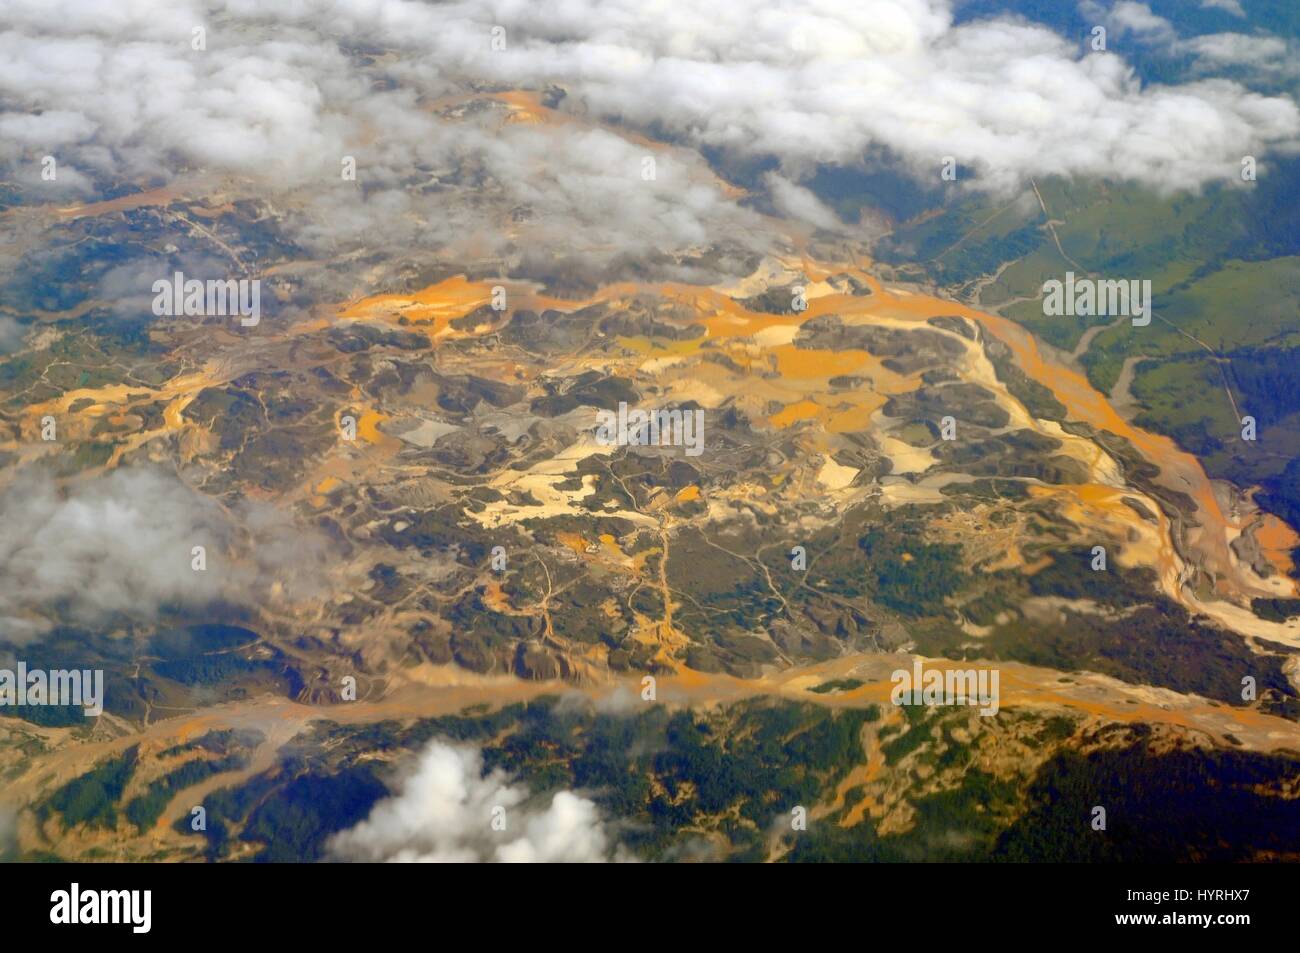 Peru, Amazon Rainforest, Aerial View Stock Photo